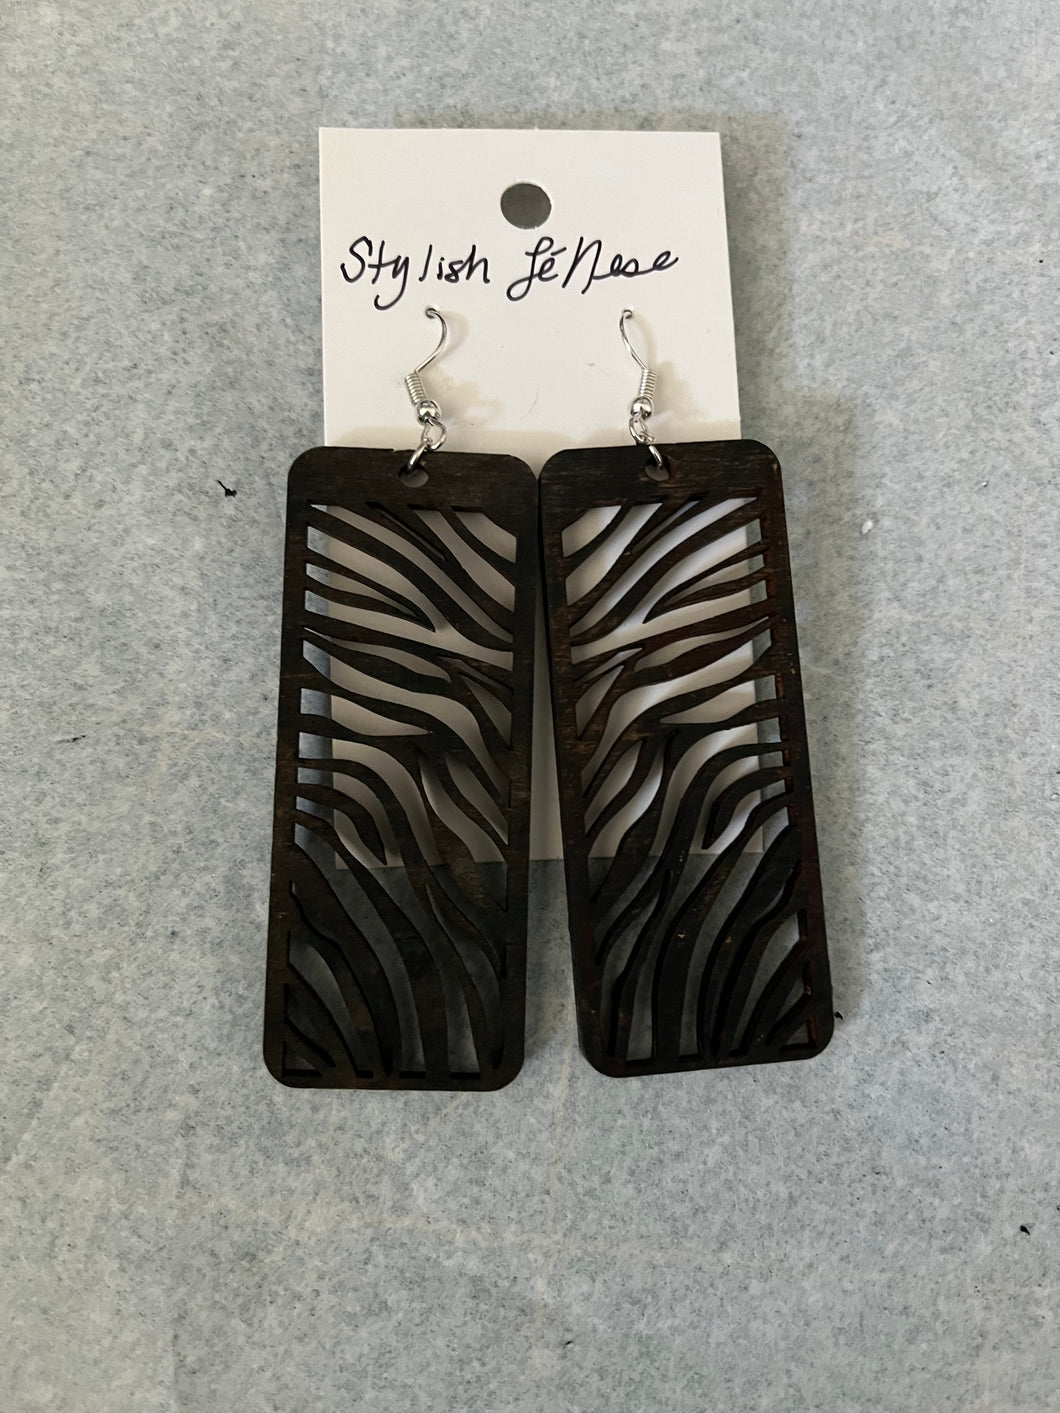 Cut Out Zebra Motif Painted Wood Earrings - Exclusive